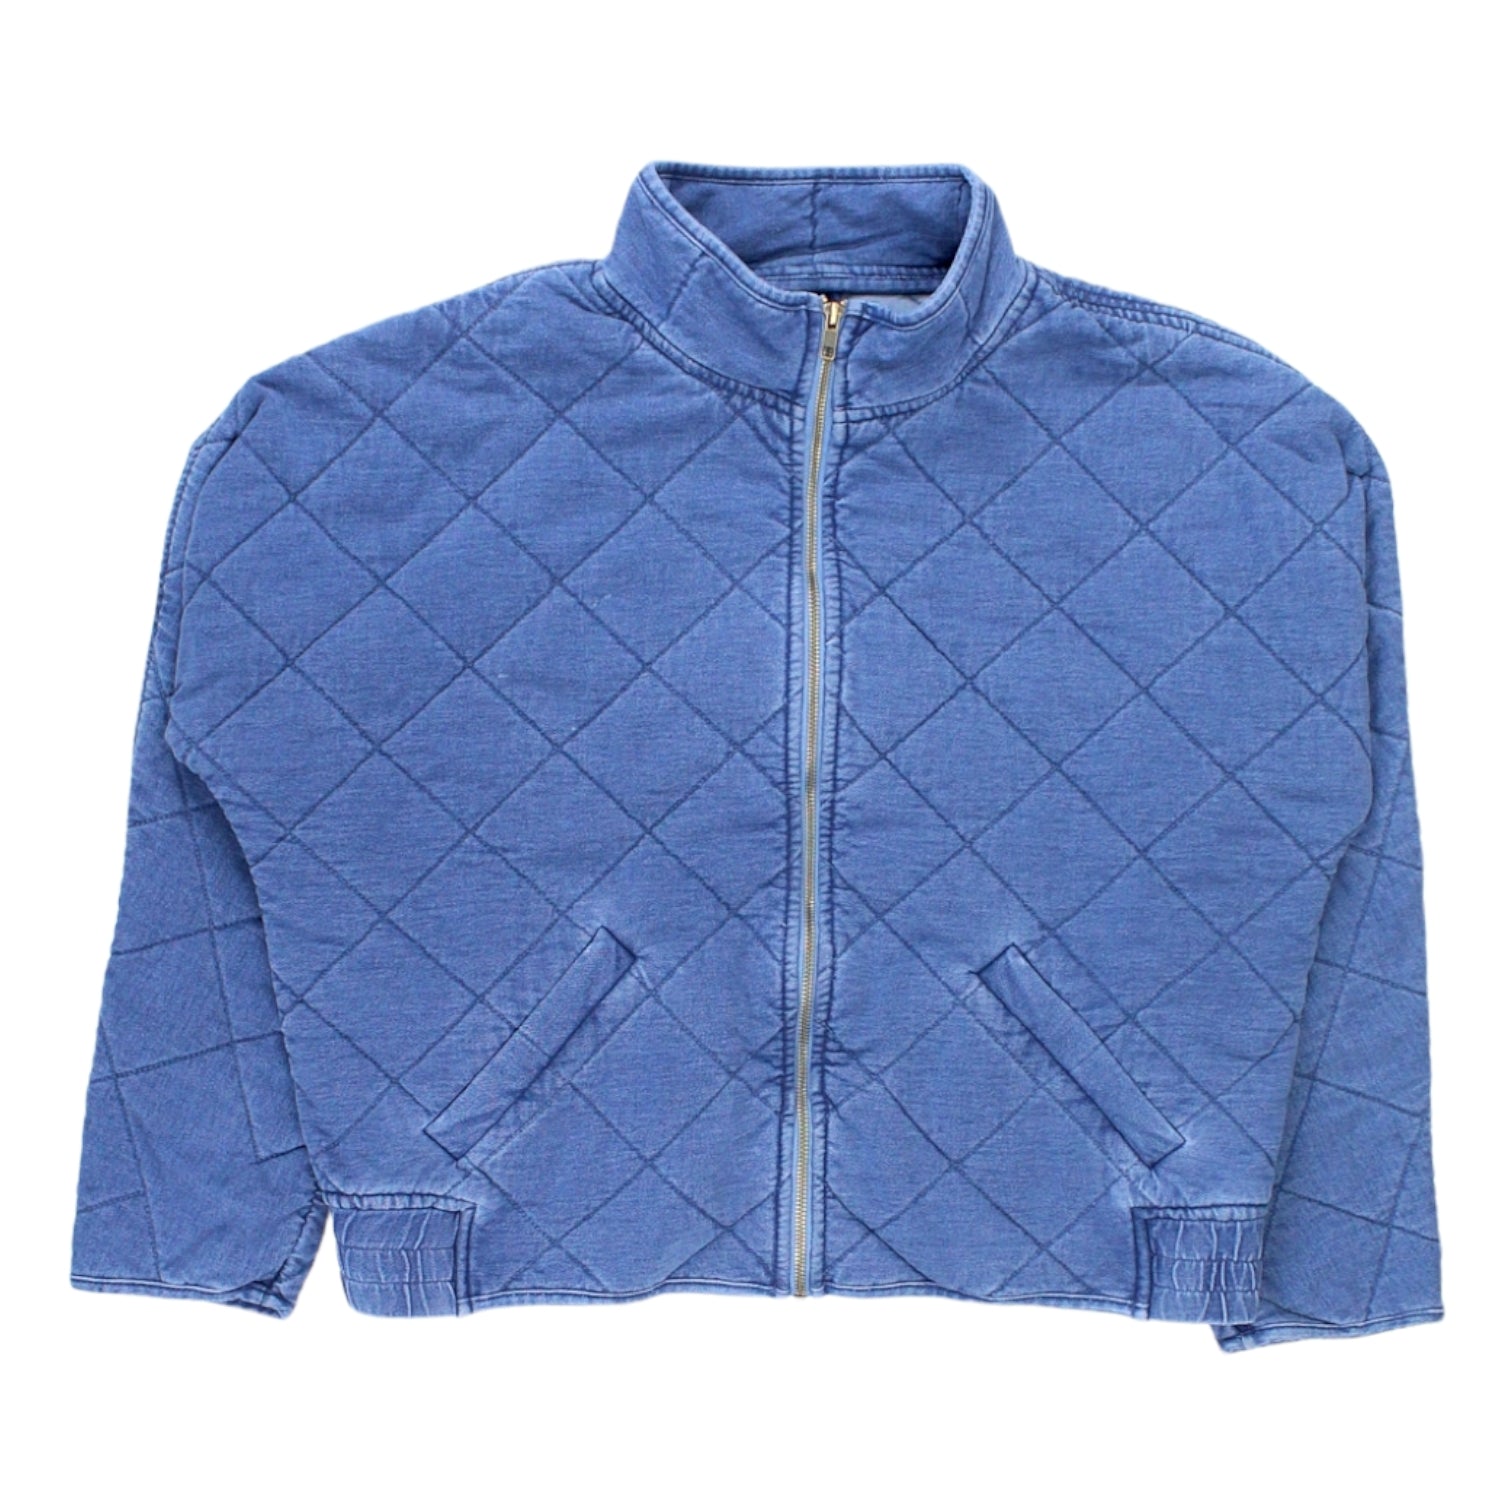 Hush Washed Blue Jacket | Shop from Crisis Online